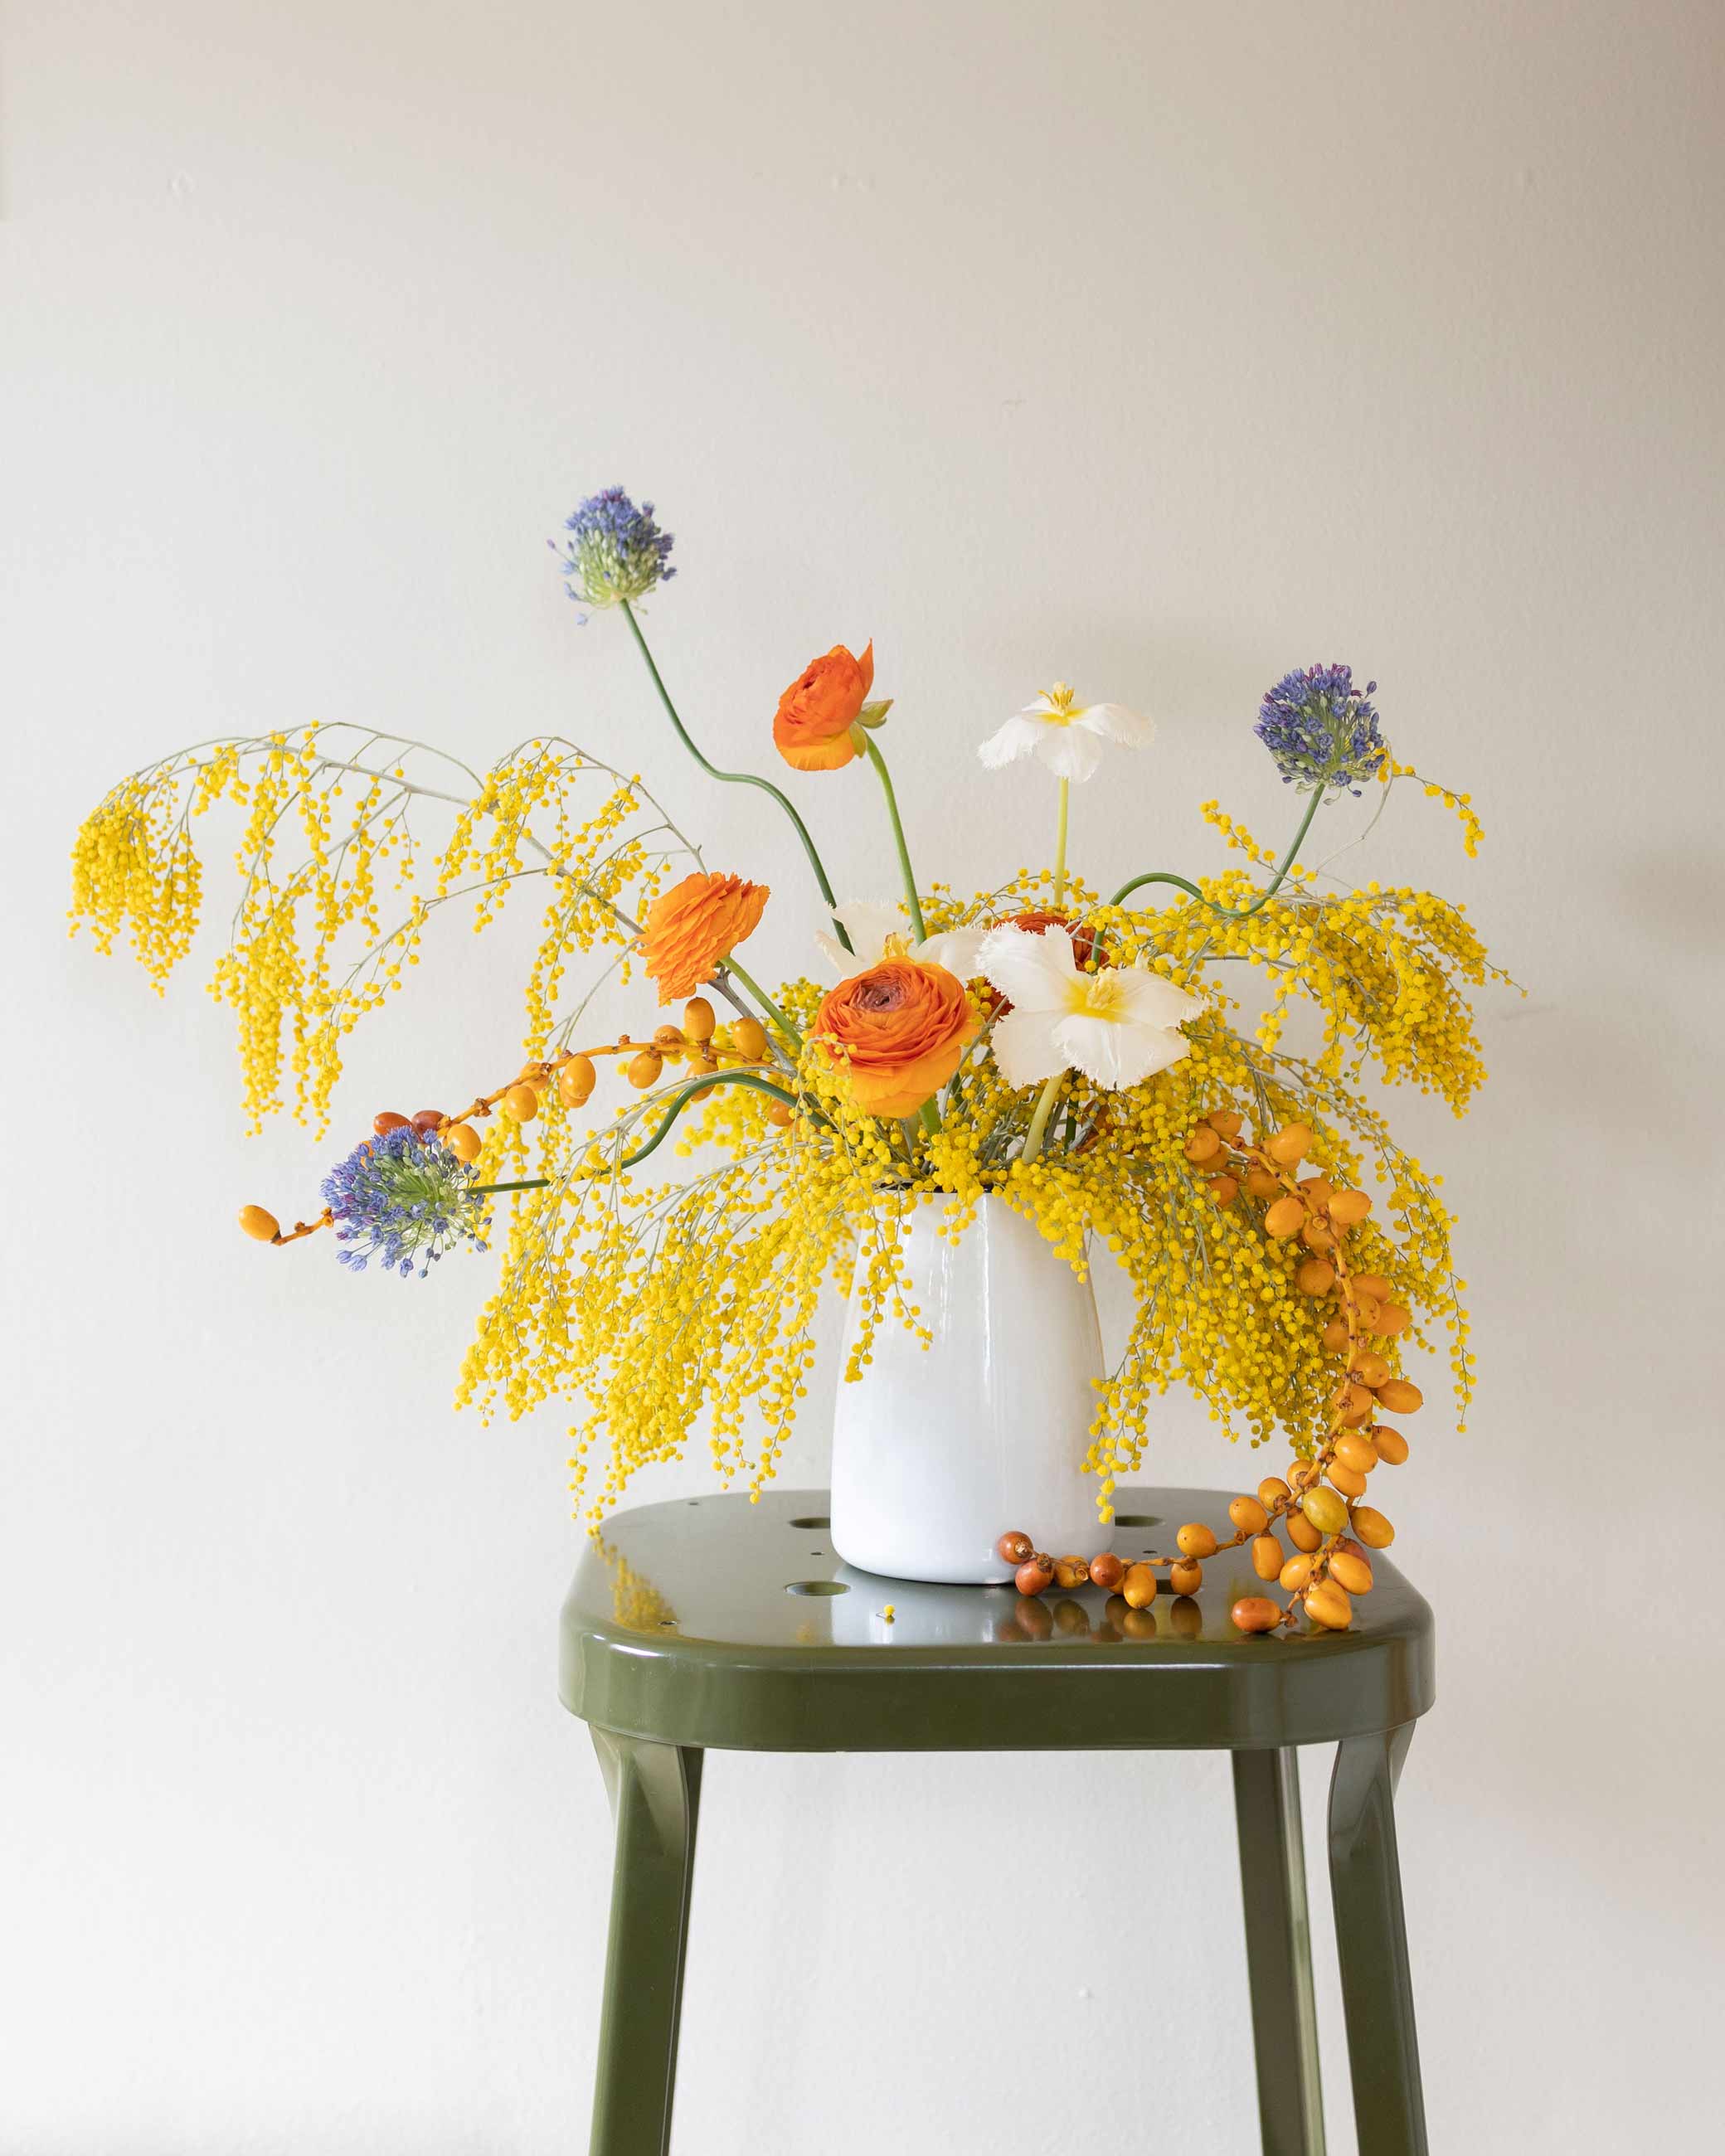 Vibrant floral arrangement in enamel crock sitting on green stool. 